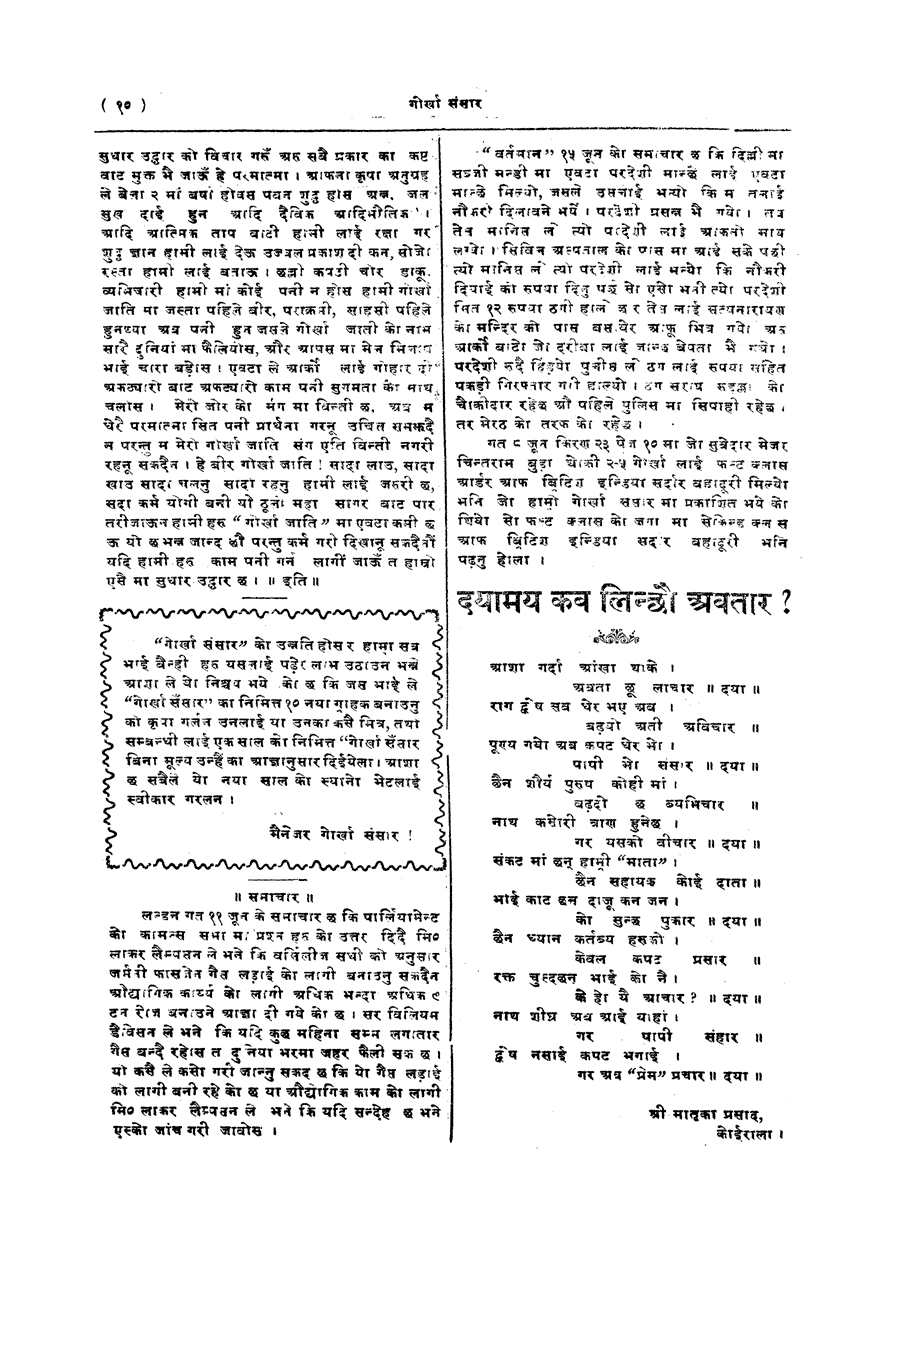 Gorkha Sansar, 15 June 1928, page 10